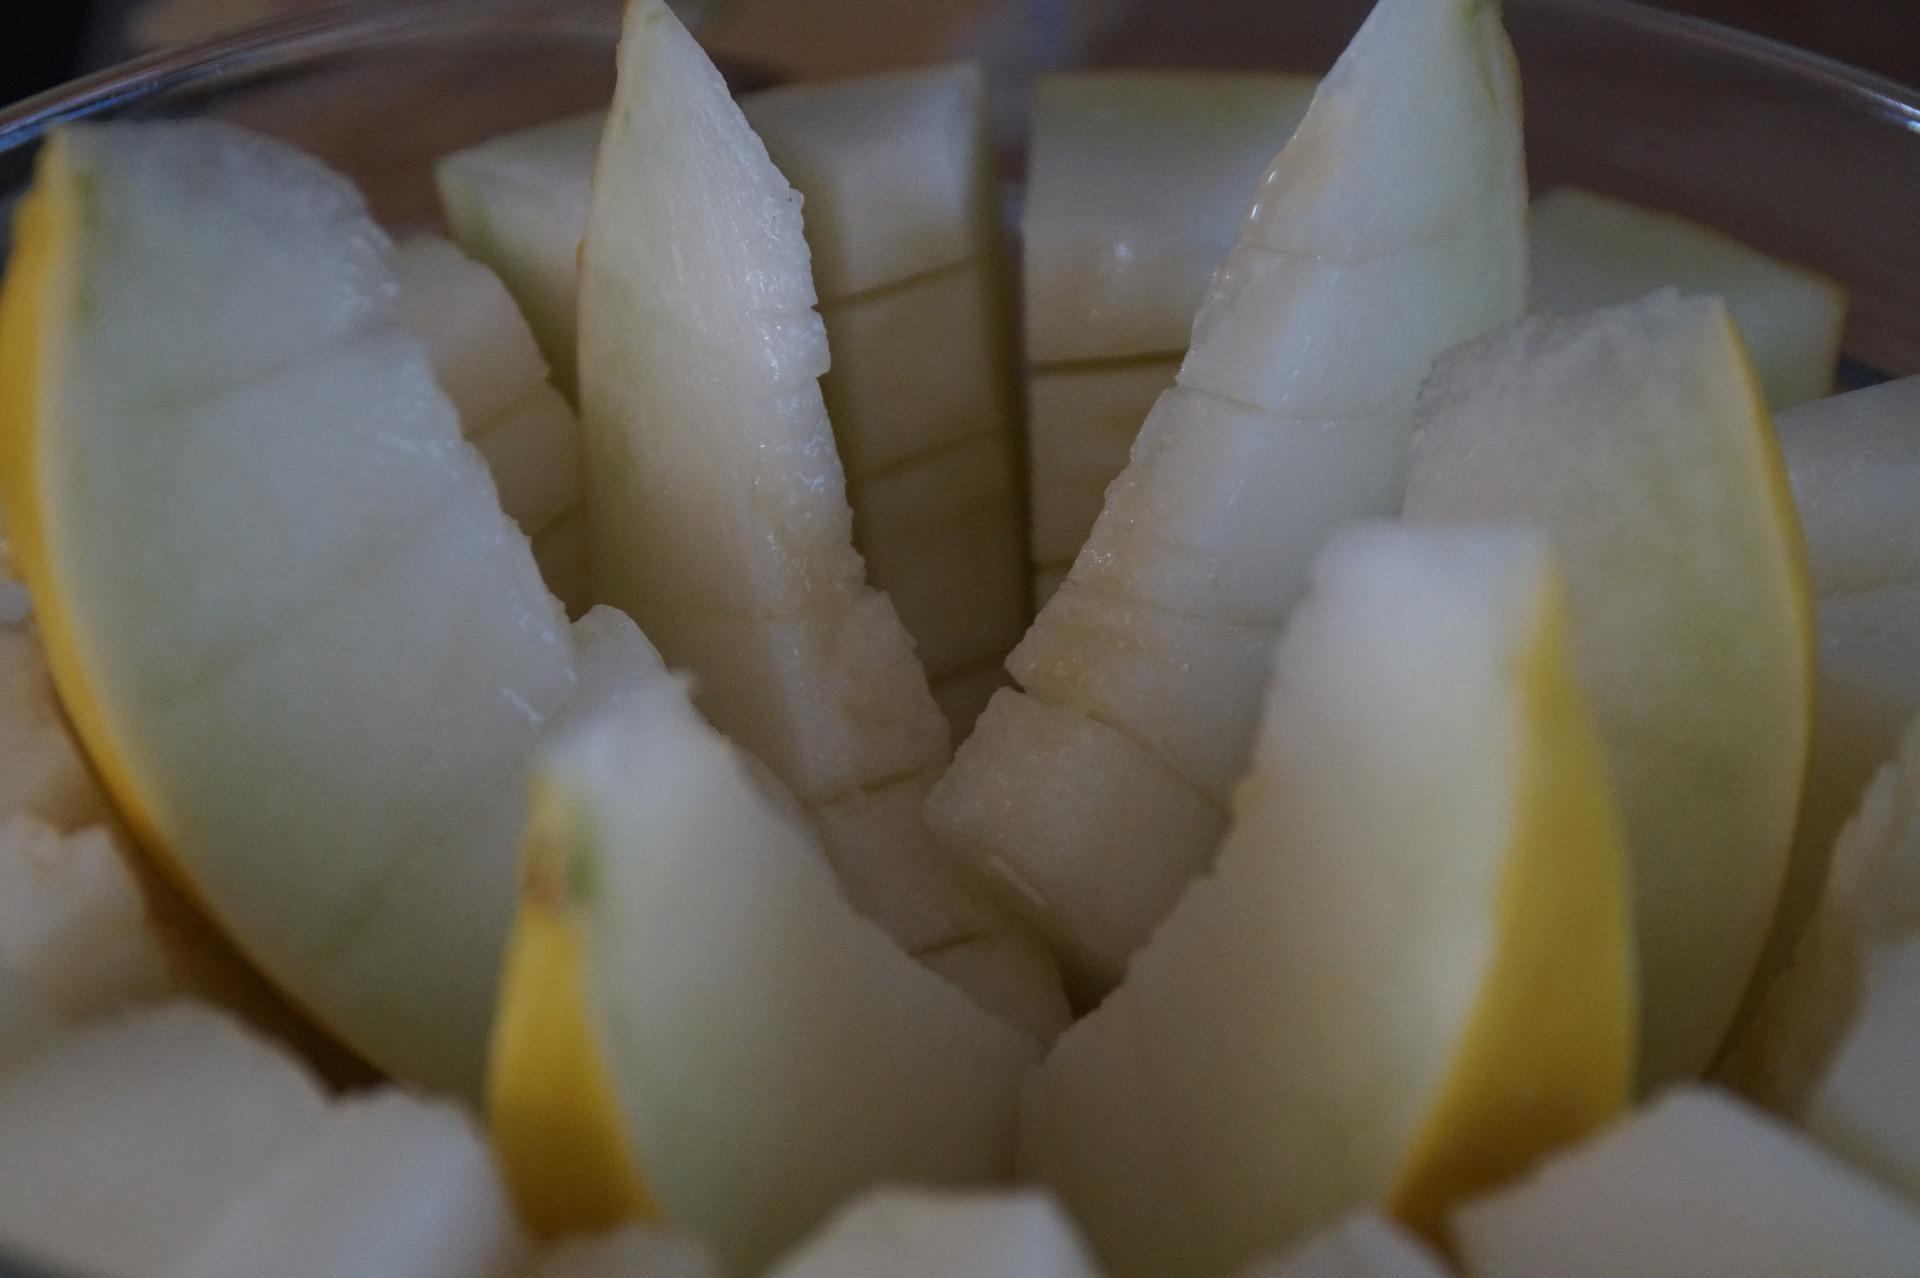 Sliced yellow melon